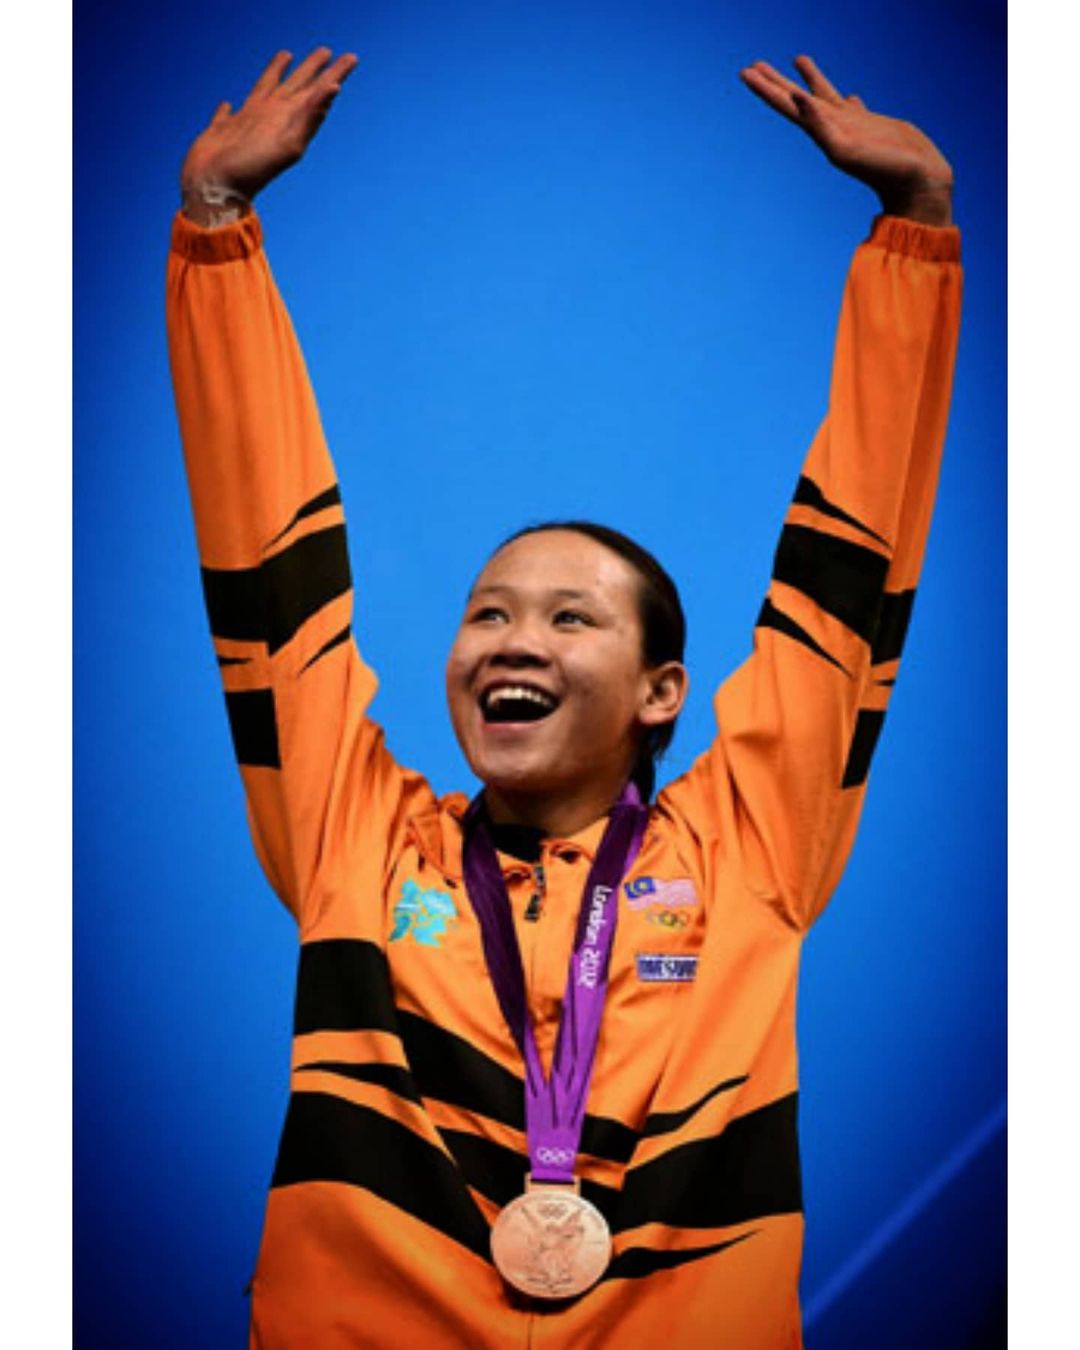 Pandelela winning her first Olympic medal